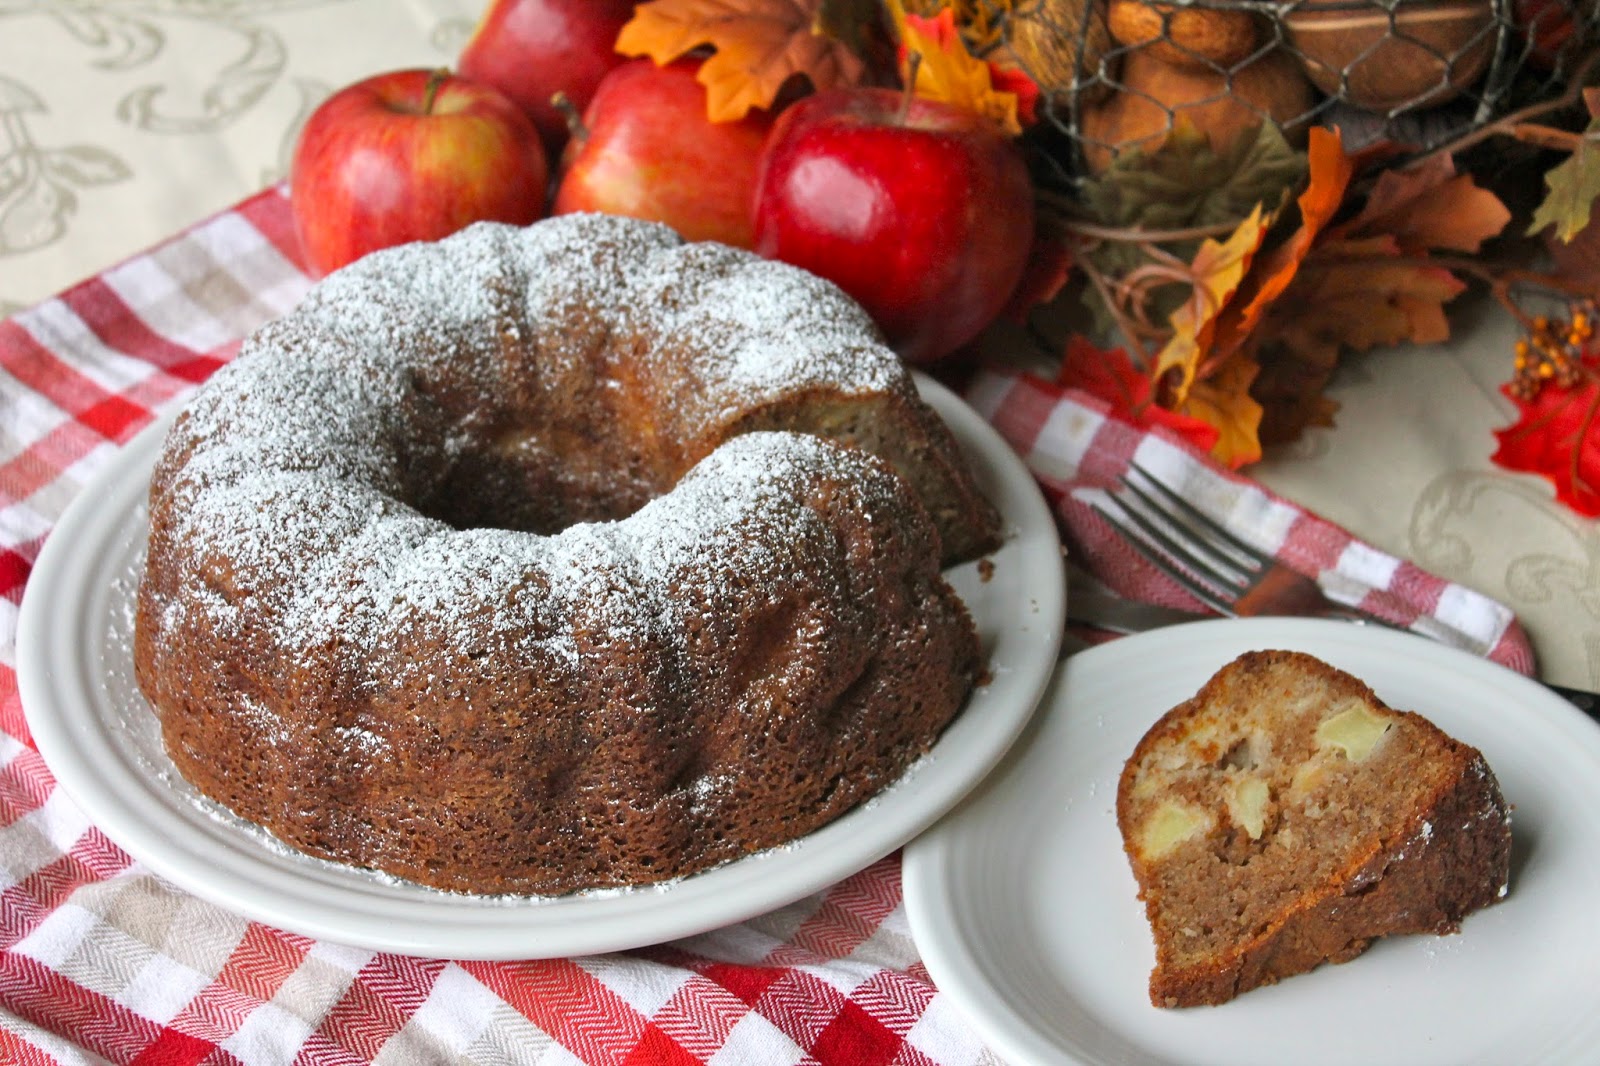 The Cultural Dish: Apple Spice Bundt Cake